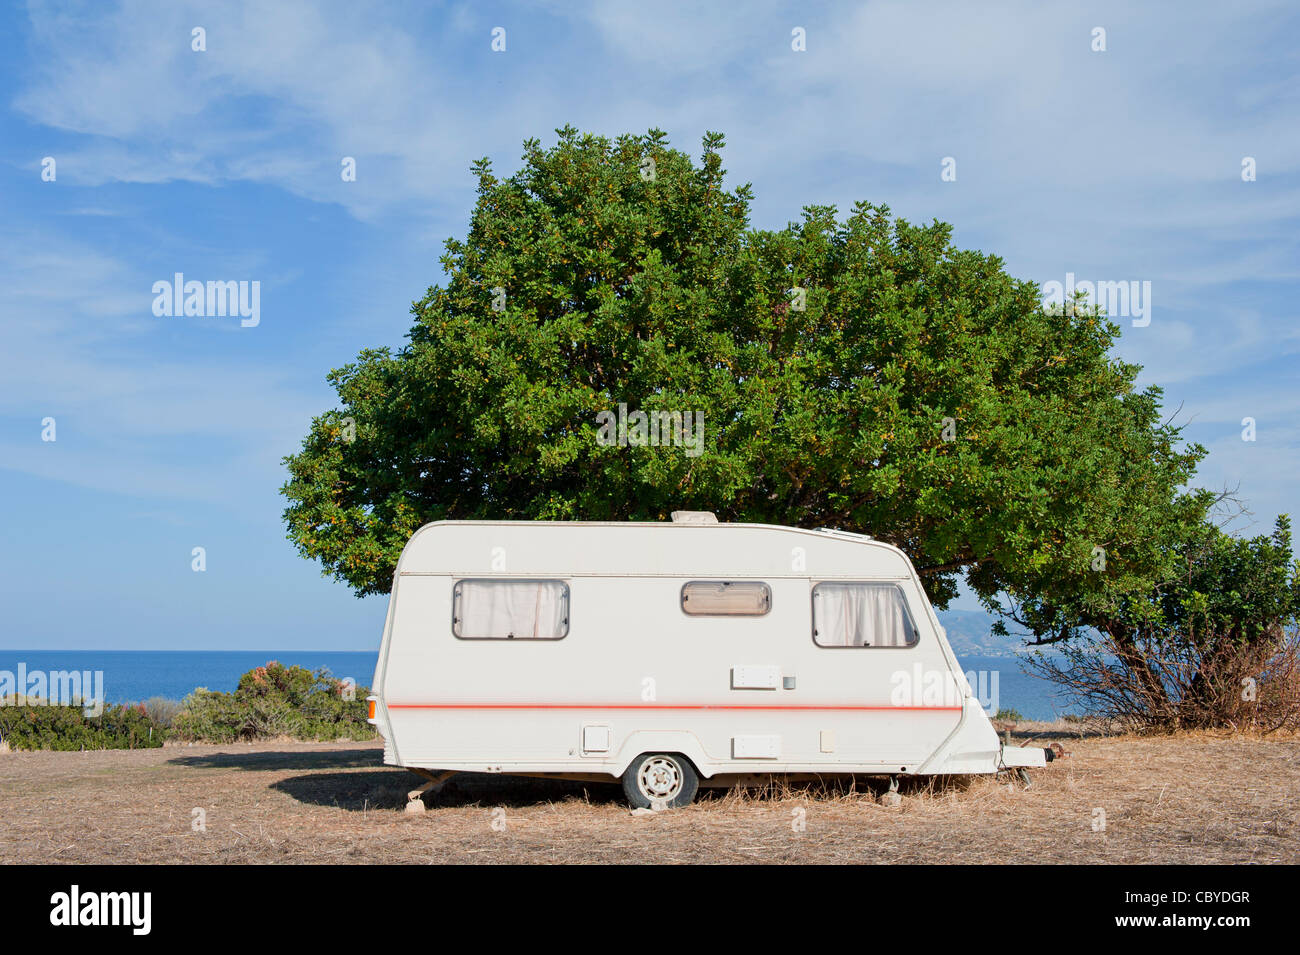 Wohnwagen auf Campingplatz am Meer Stockfoto